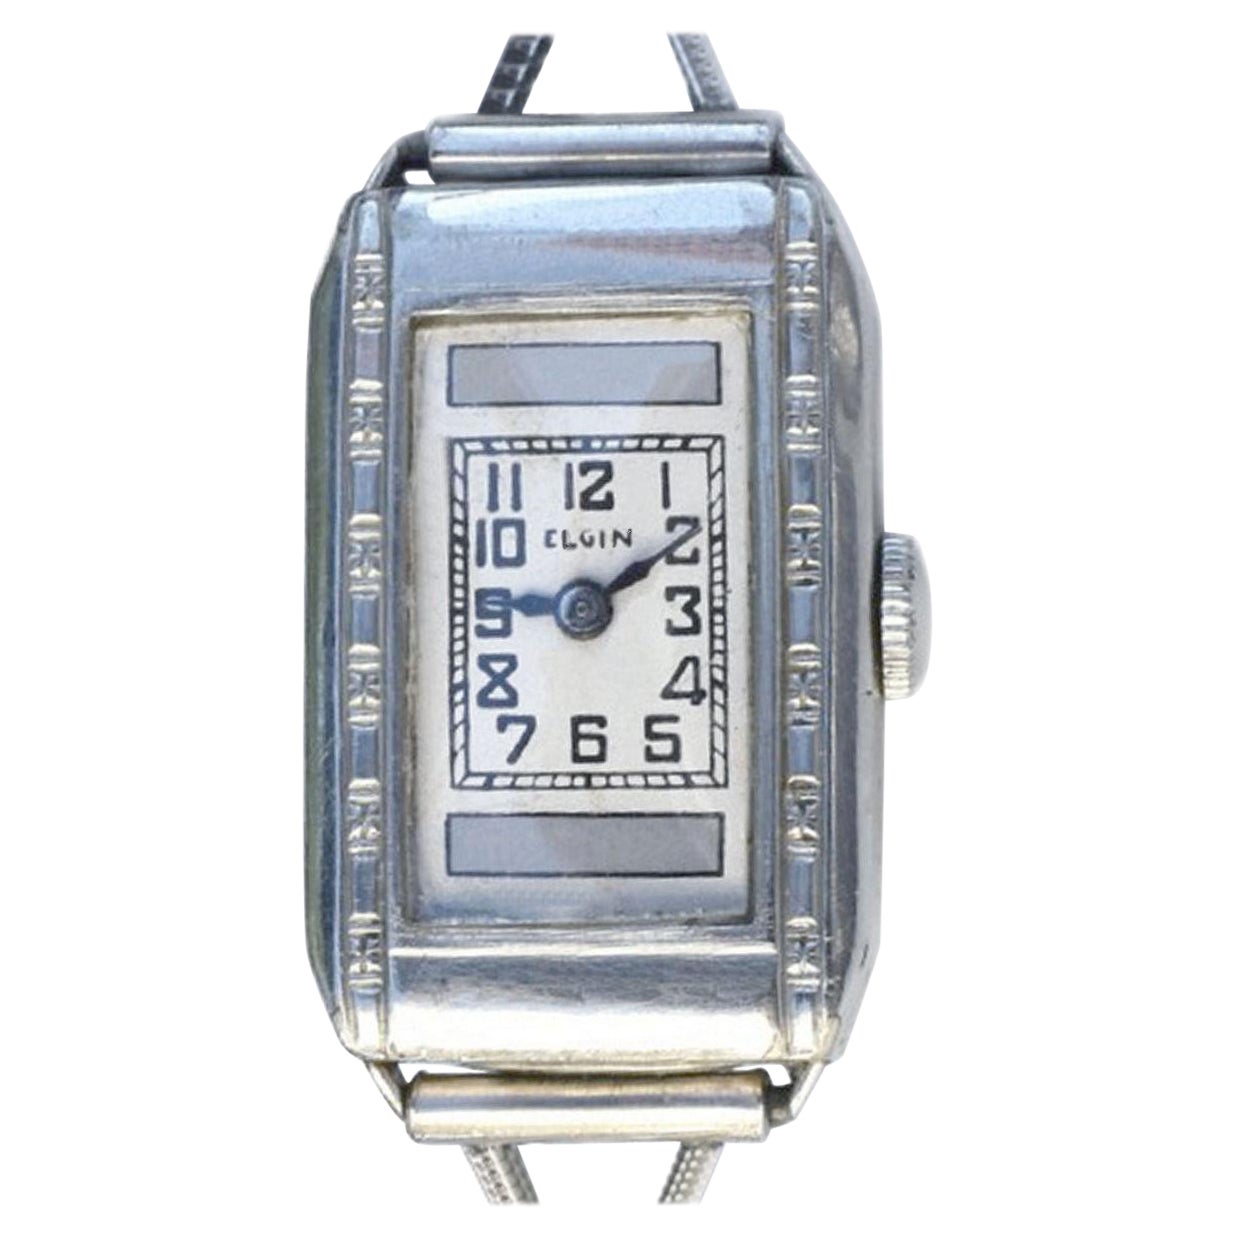 Art Deco Ladies 10k Gold Filled Wrist Watch by Elgin, c1930